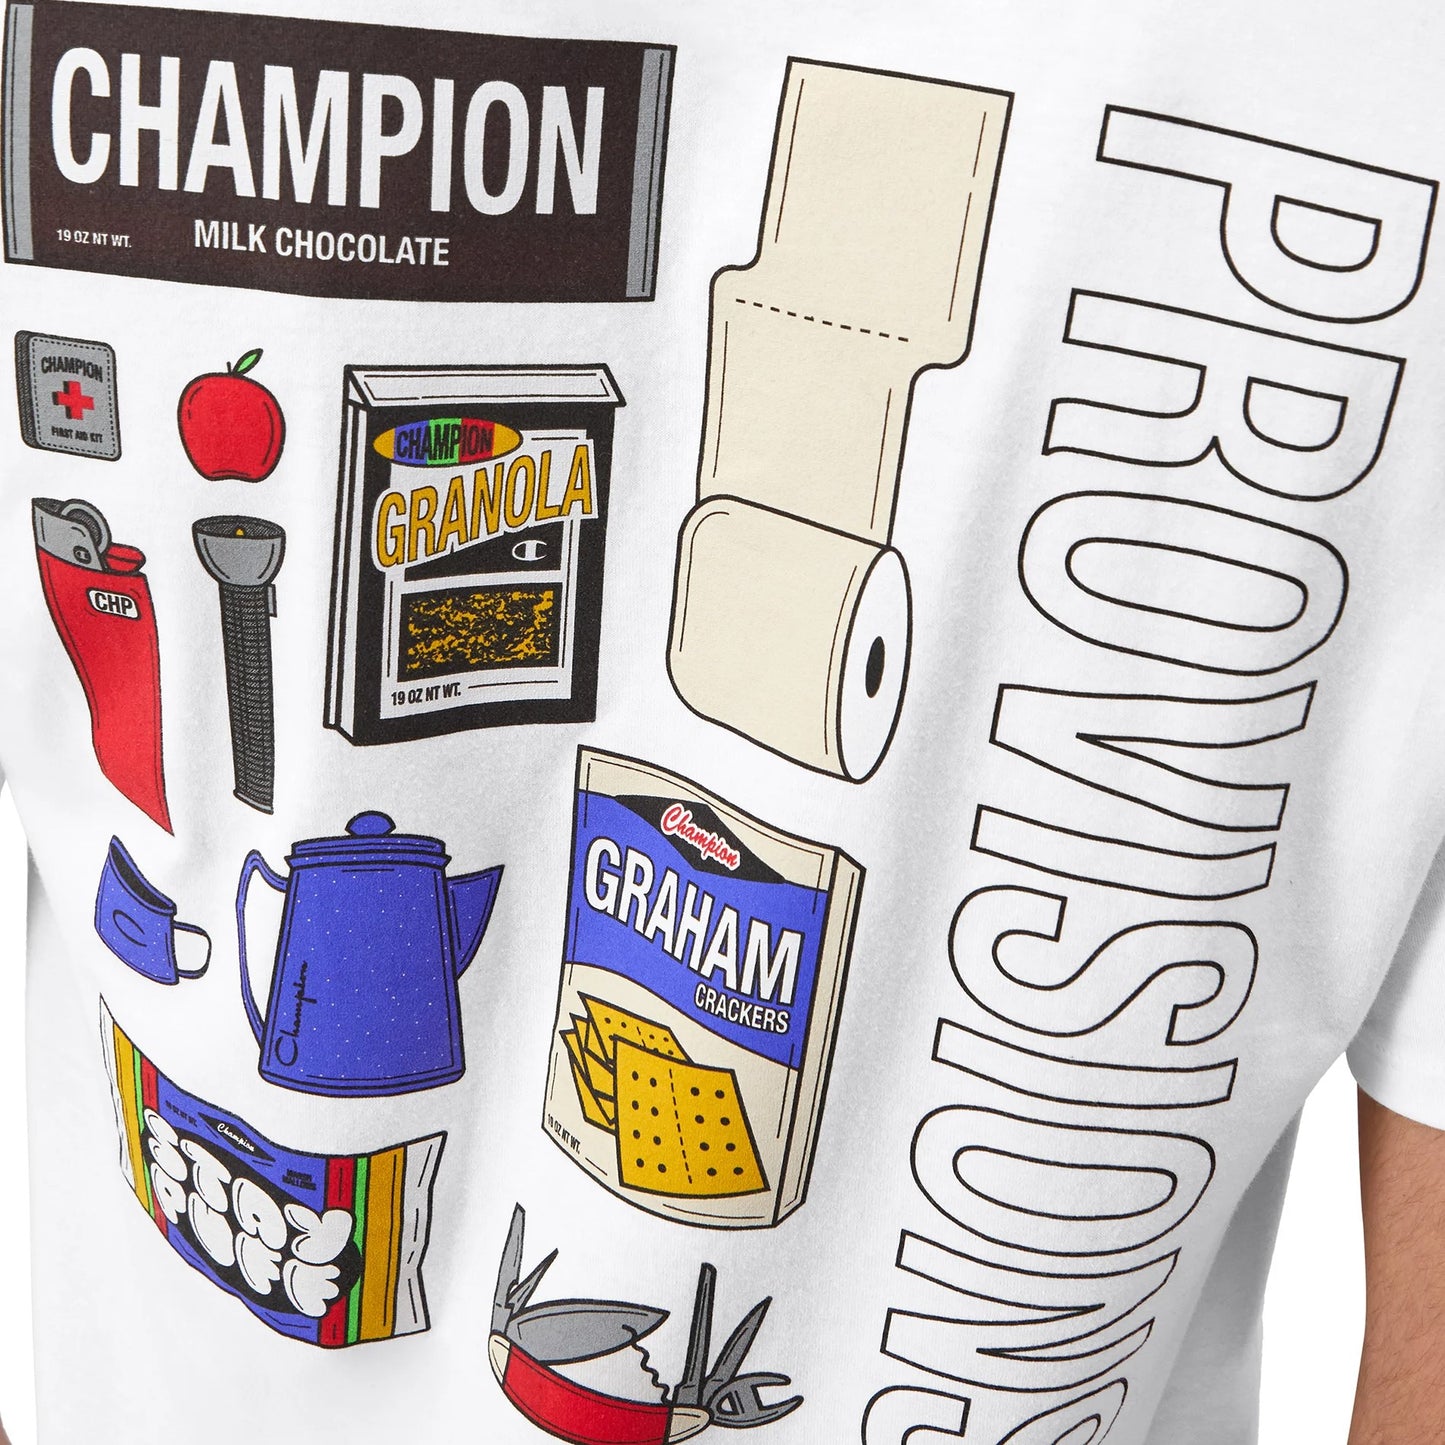 CHAMPION Provisions Classic Graphic T-Shirt - White